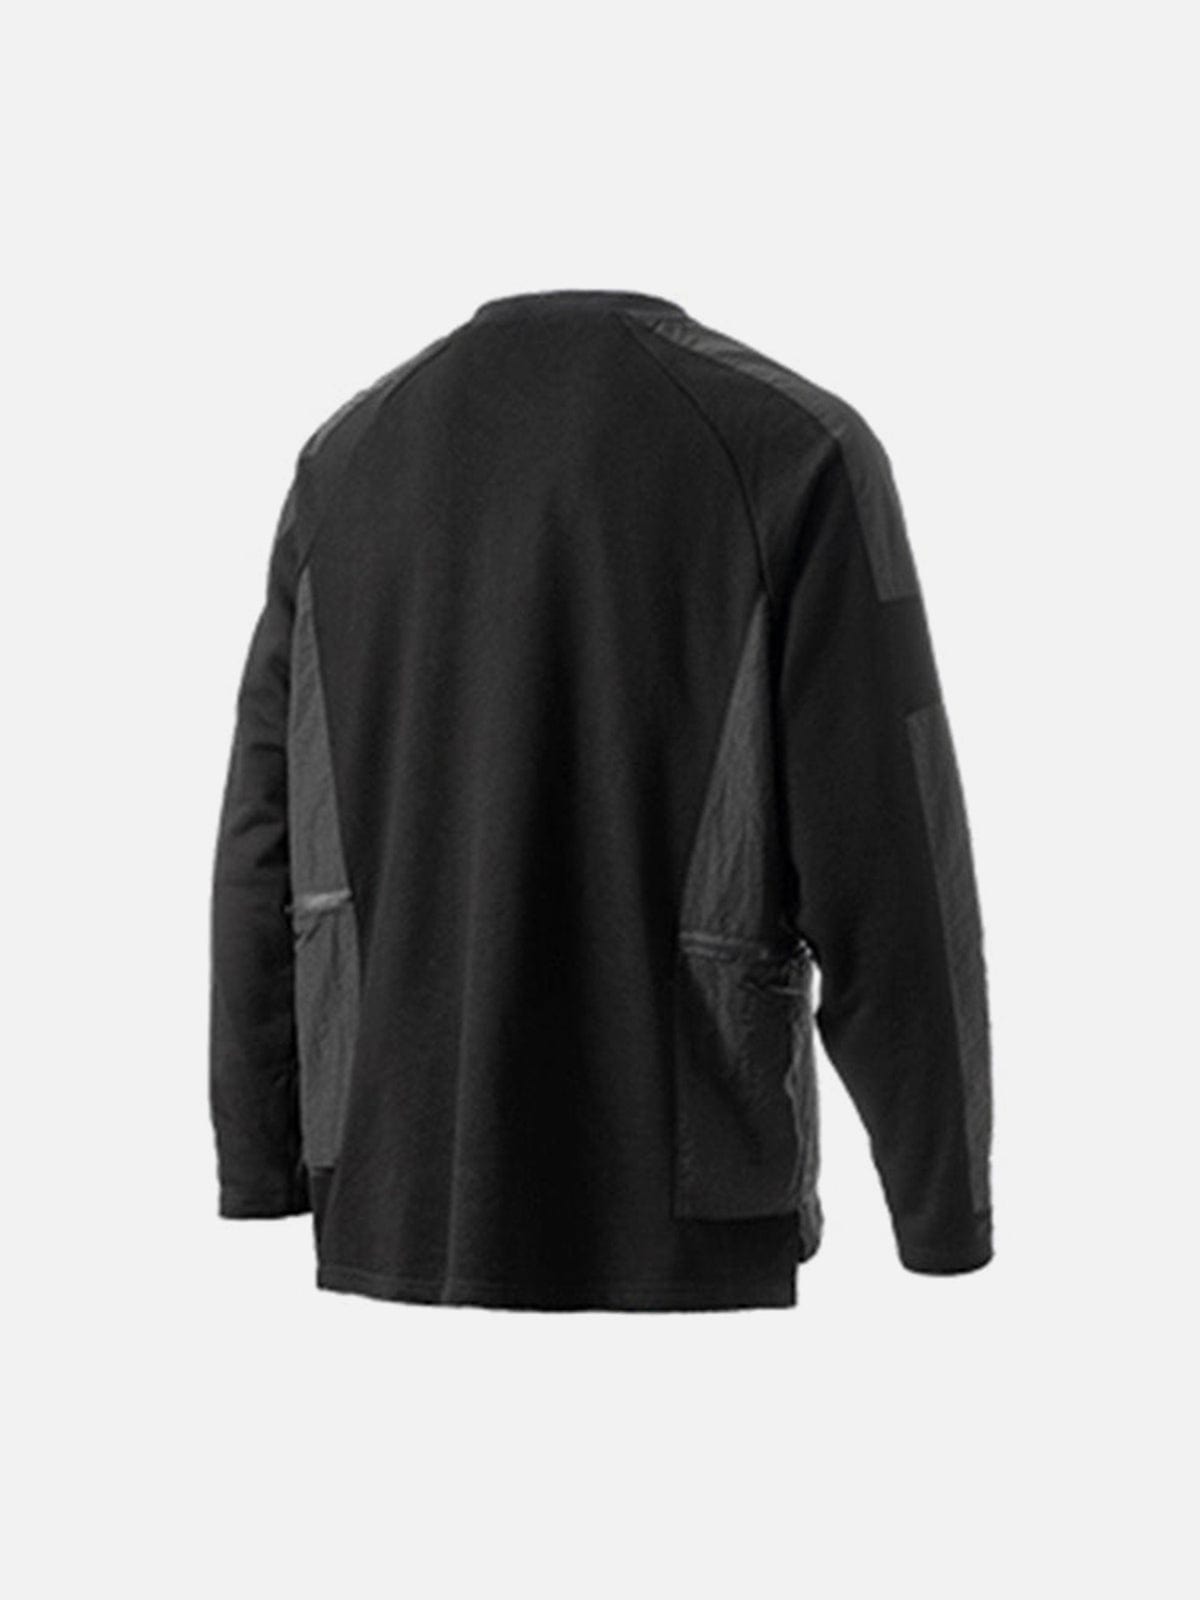 Functional Ninja Patchwork Sweatshirt Streetwear Brand Techwear Combat Tactical YUGEN THEORY